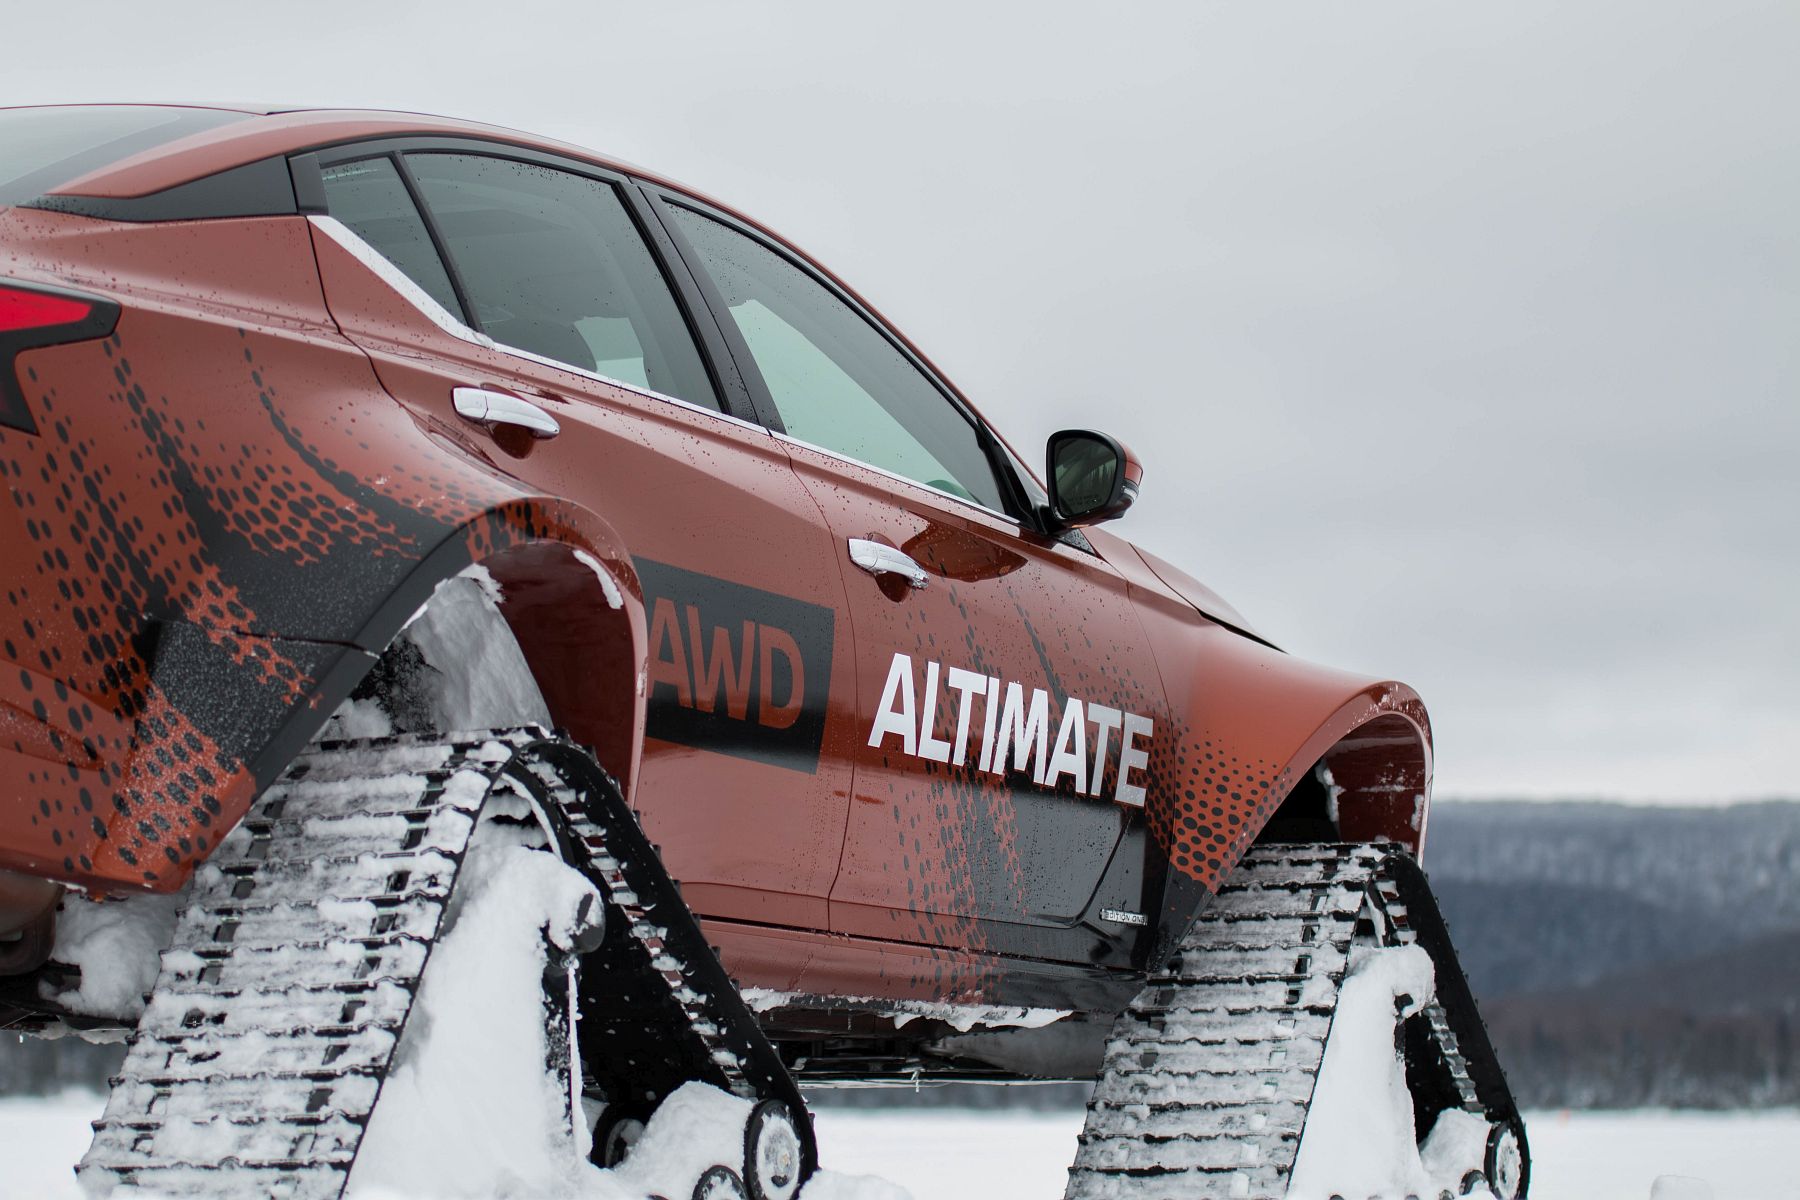 2019 01 17 Altima-te AWD Car Project – Photo LOGO MEDIUM 02-source